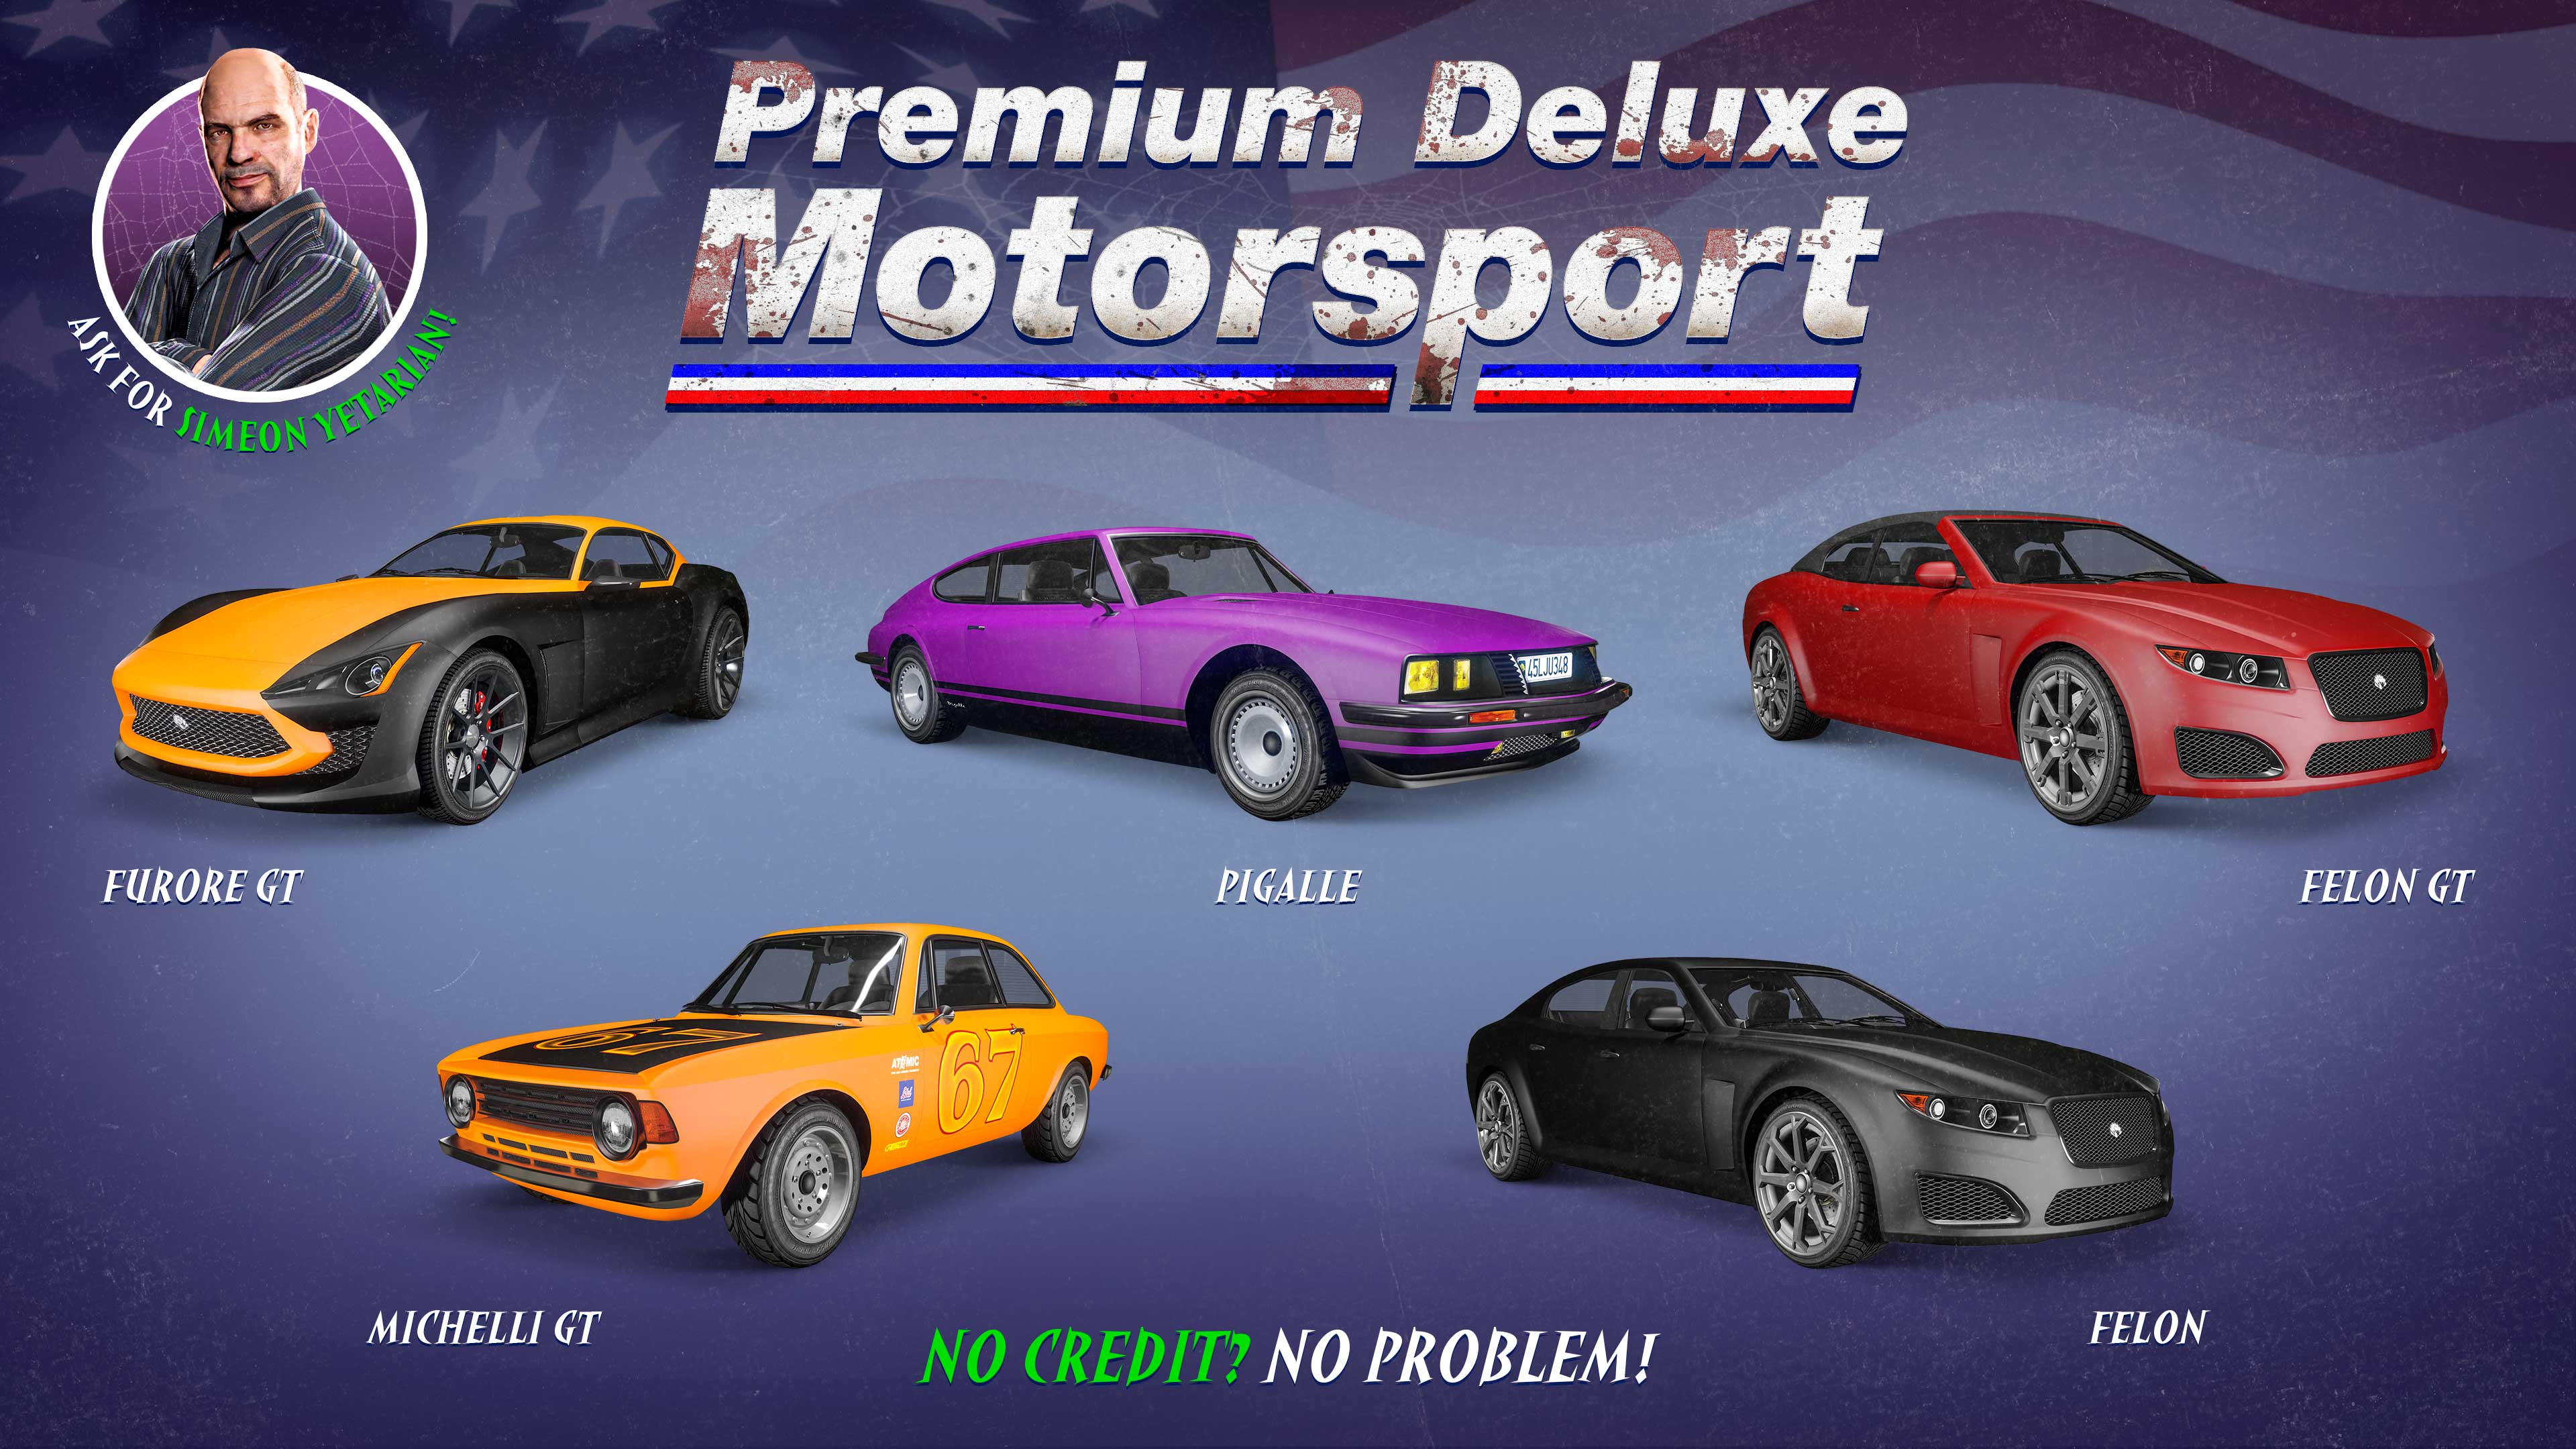 Pôster da Premium Deluxe Motorsport com Furore GT, Pigalle, Felon GT, Michelli GT, e Felon